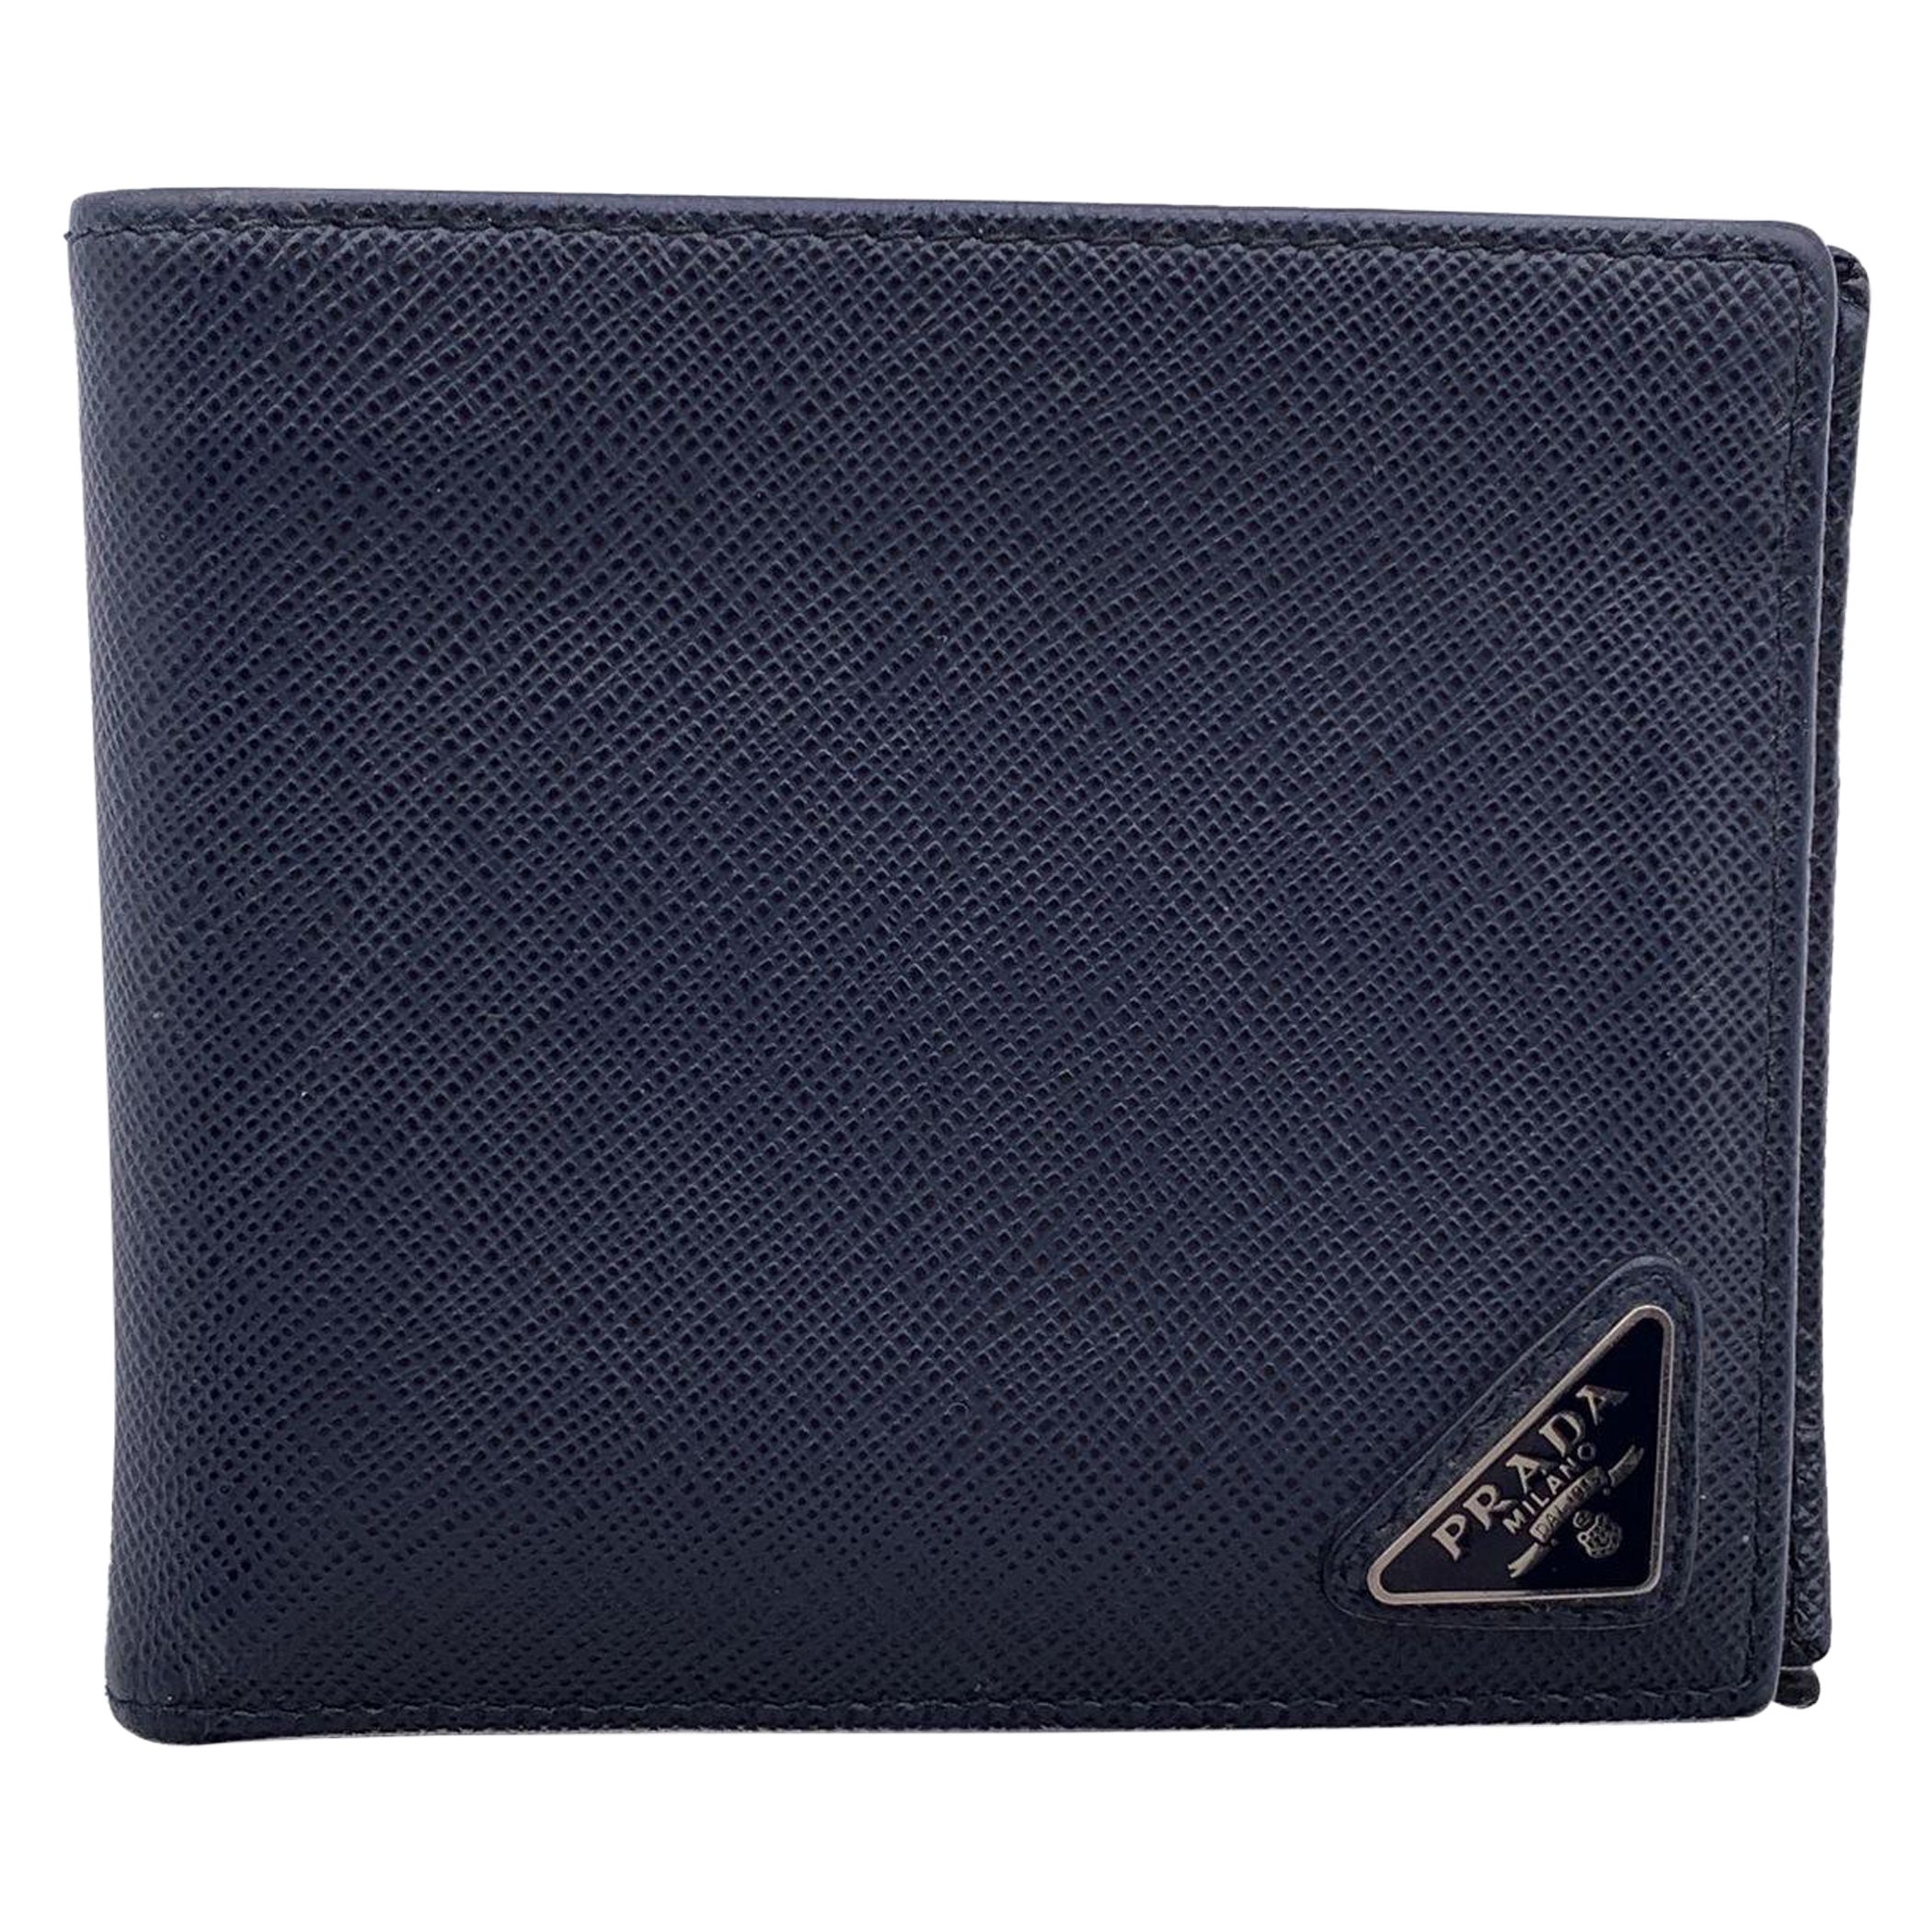 Prada Blue Saffiano Leather Bifold Wallet Coin Purse